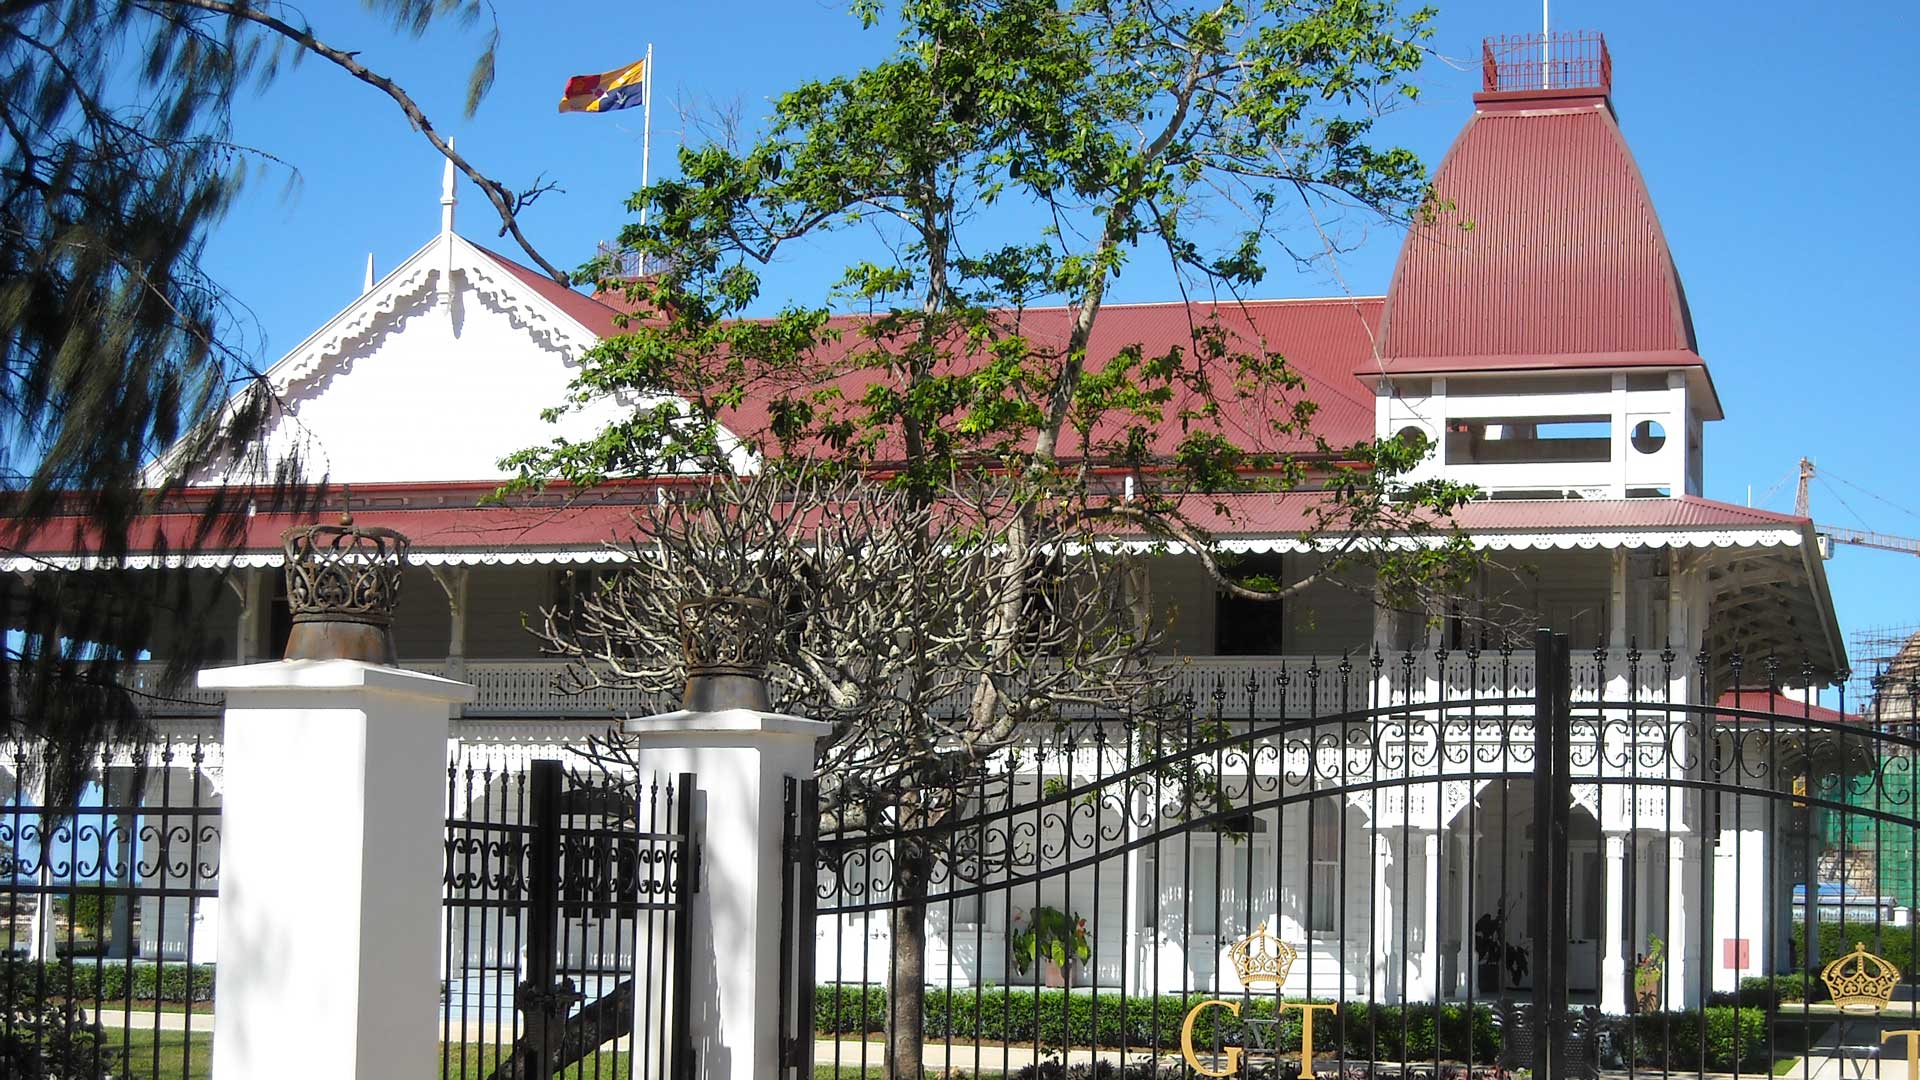 Royal Palace of Tonga